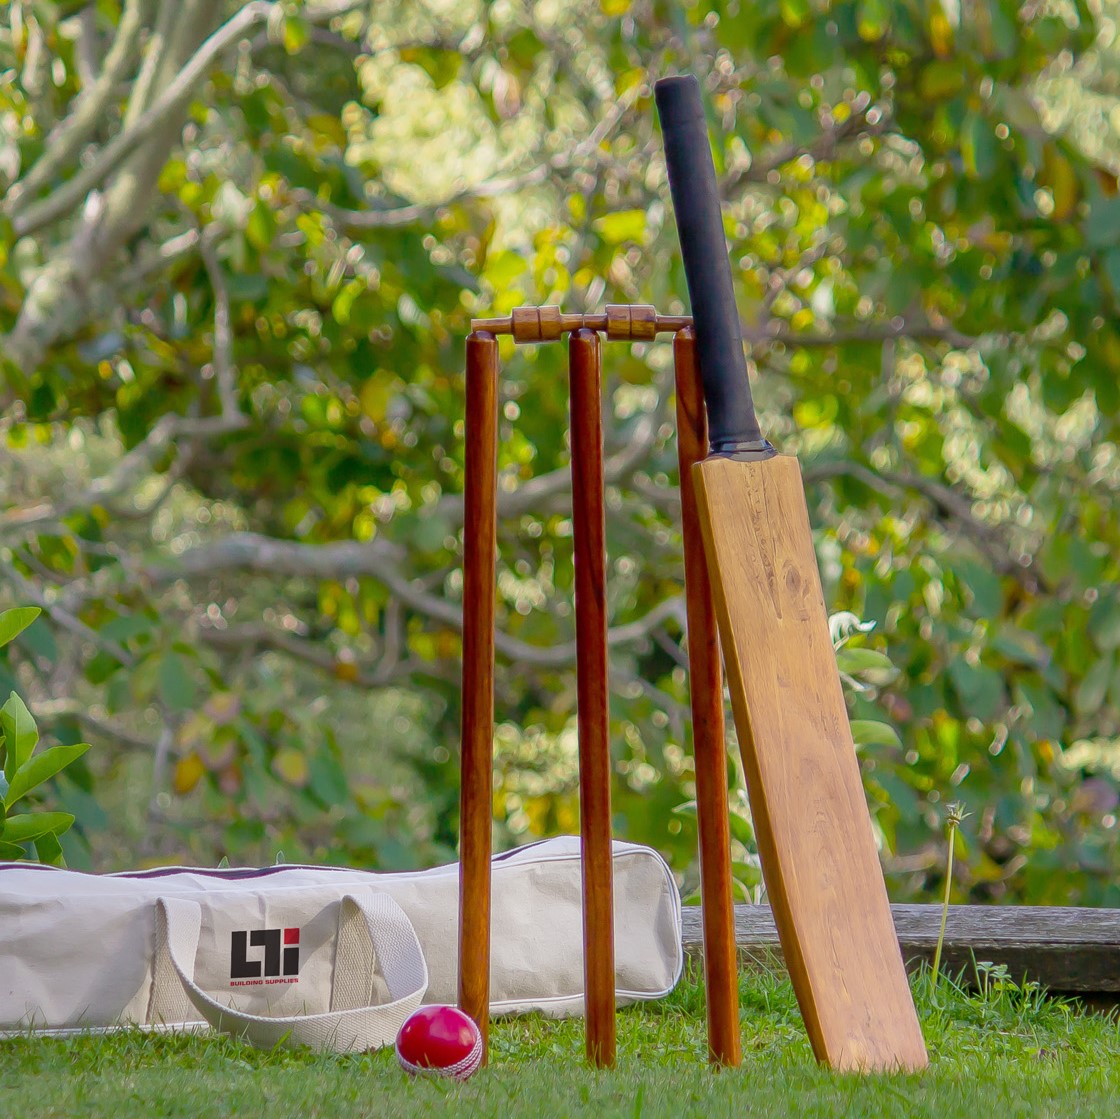 Howzat 8 Pce Backyard Cricket Set Features